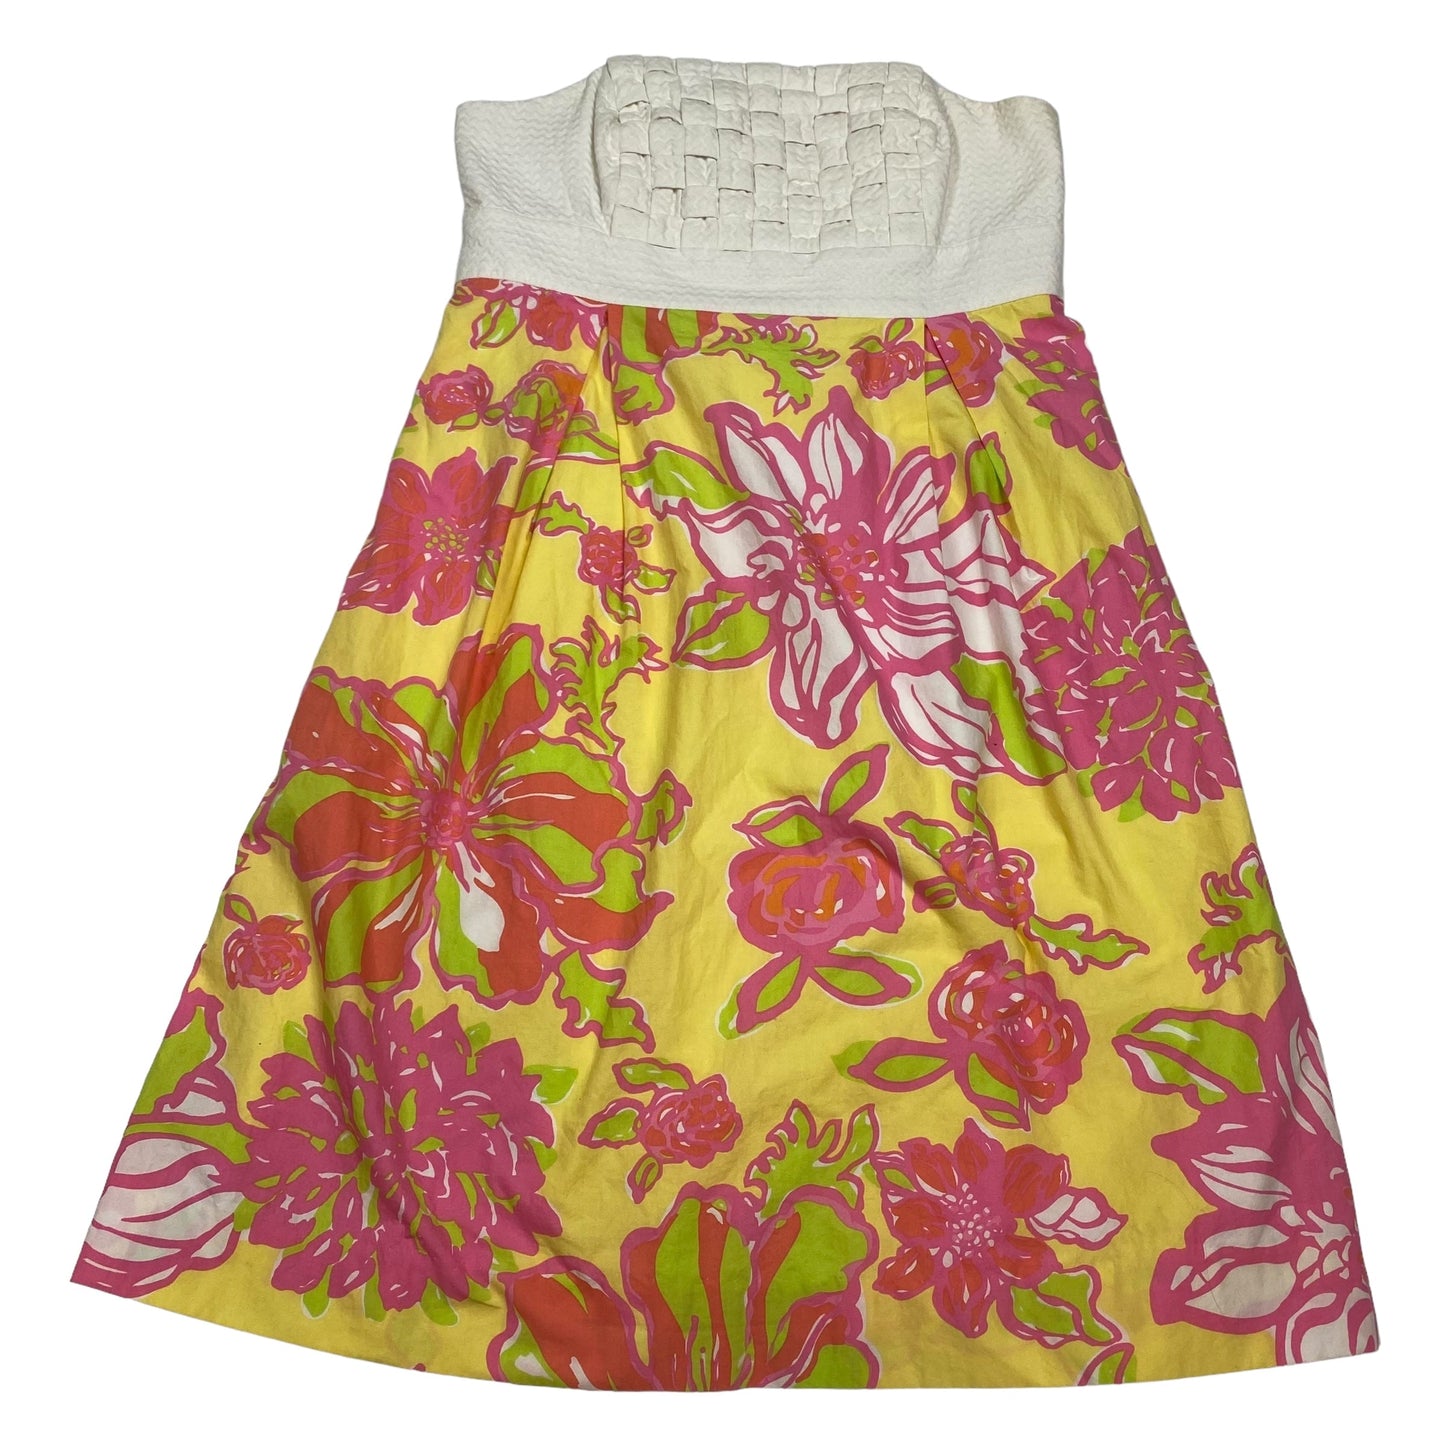 White & Yellow Dress Designer Lilly Pulitzer, Size 0